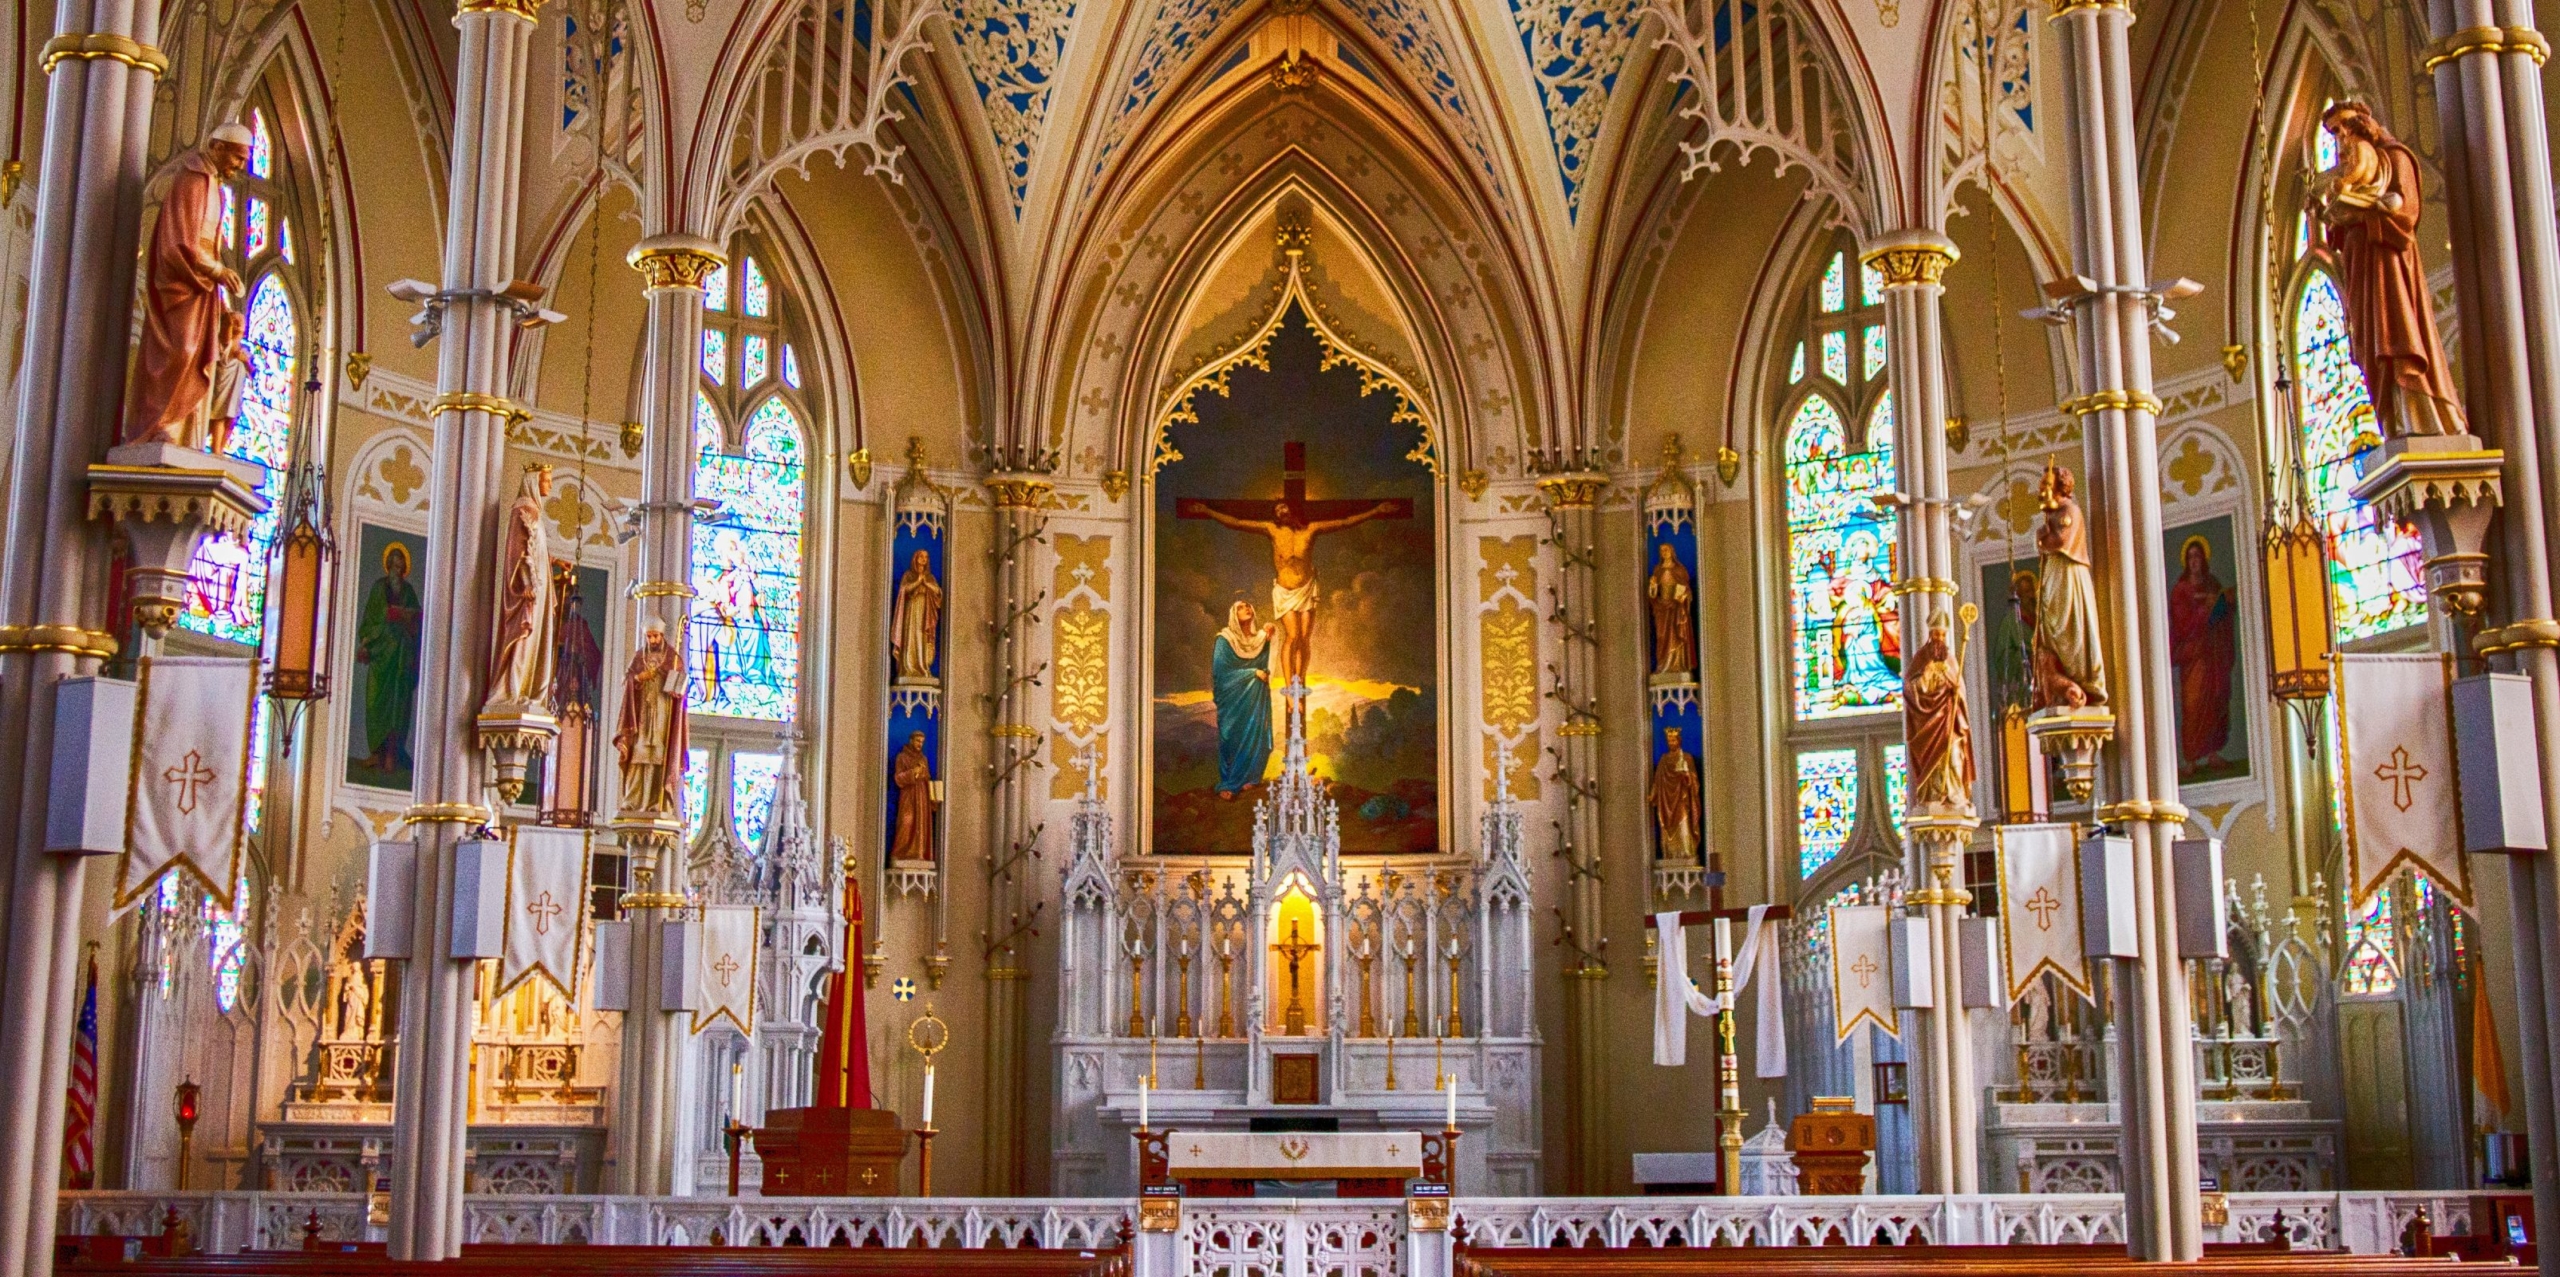 Church Sanctuary with Crucifixion Altarpiece